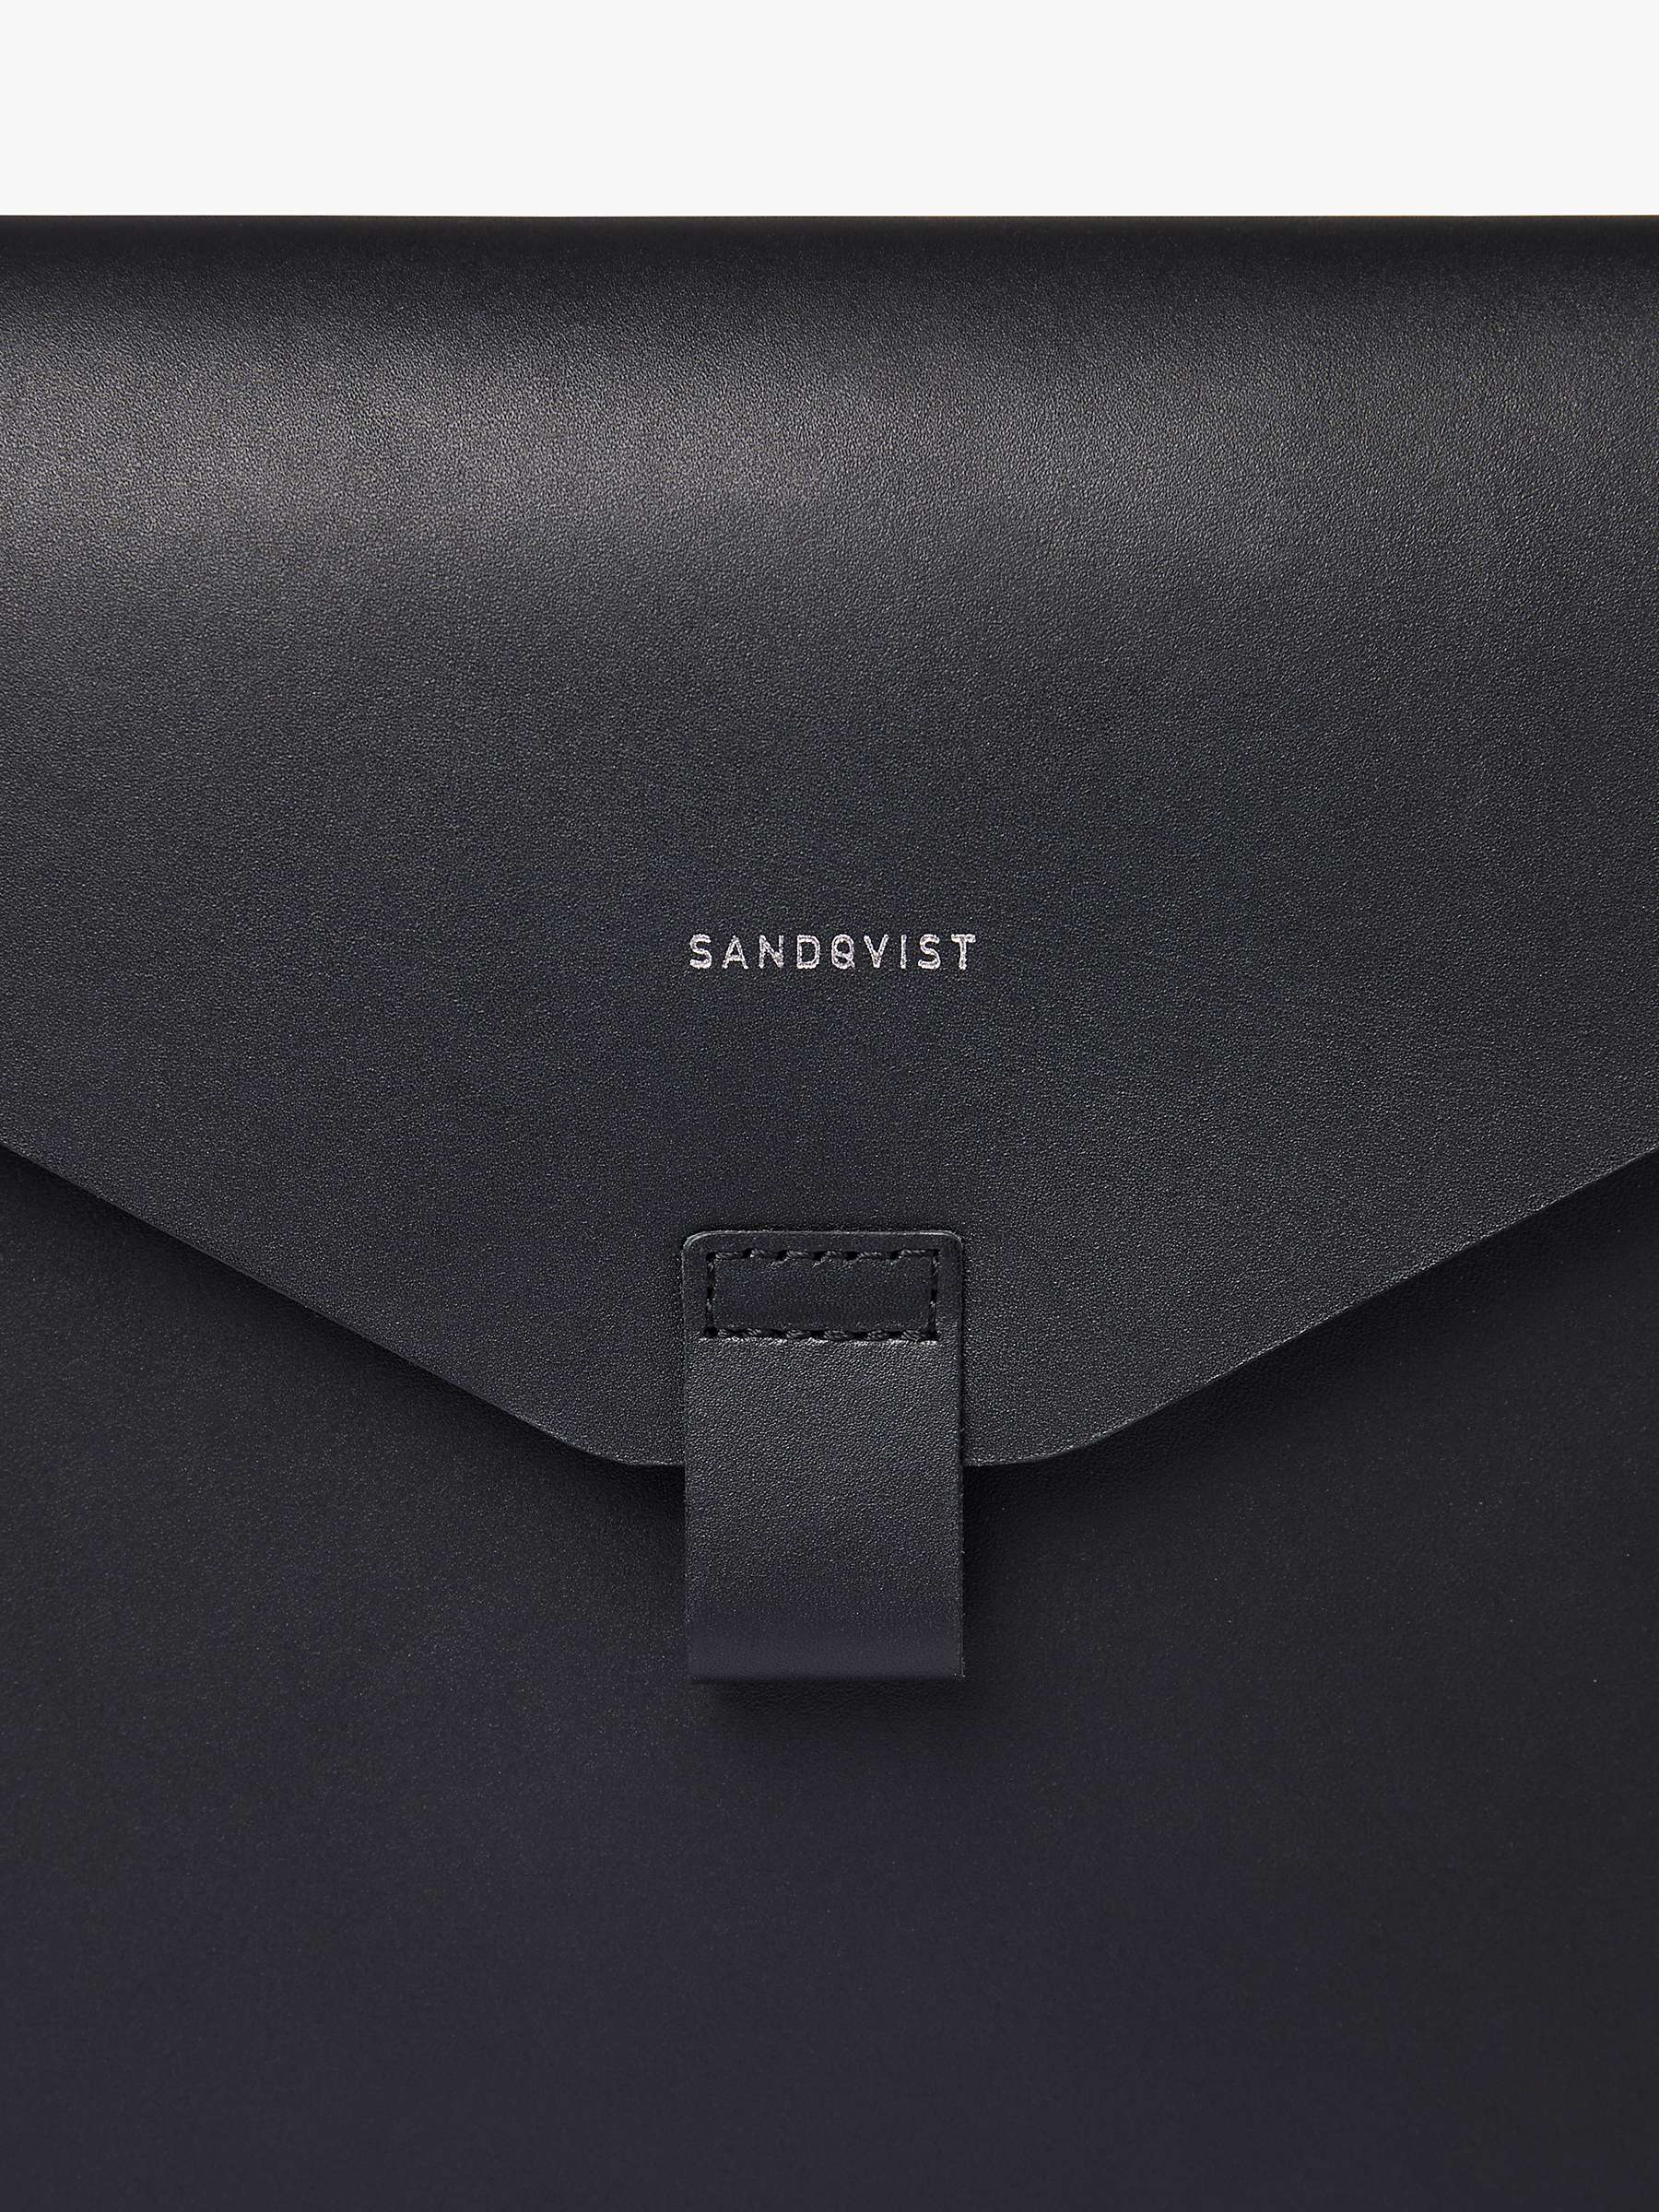 Buy Sandqvist Gustav Leather Laptop Case, Black Online at johnlewis.com